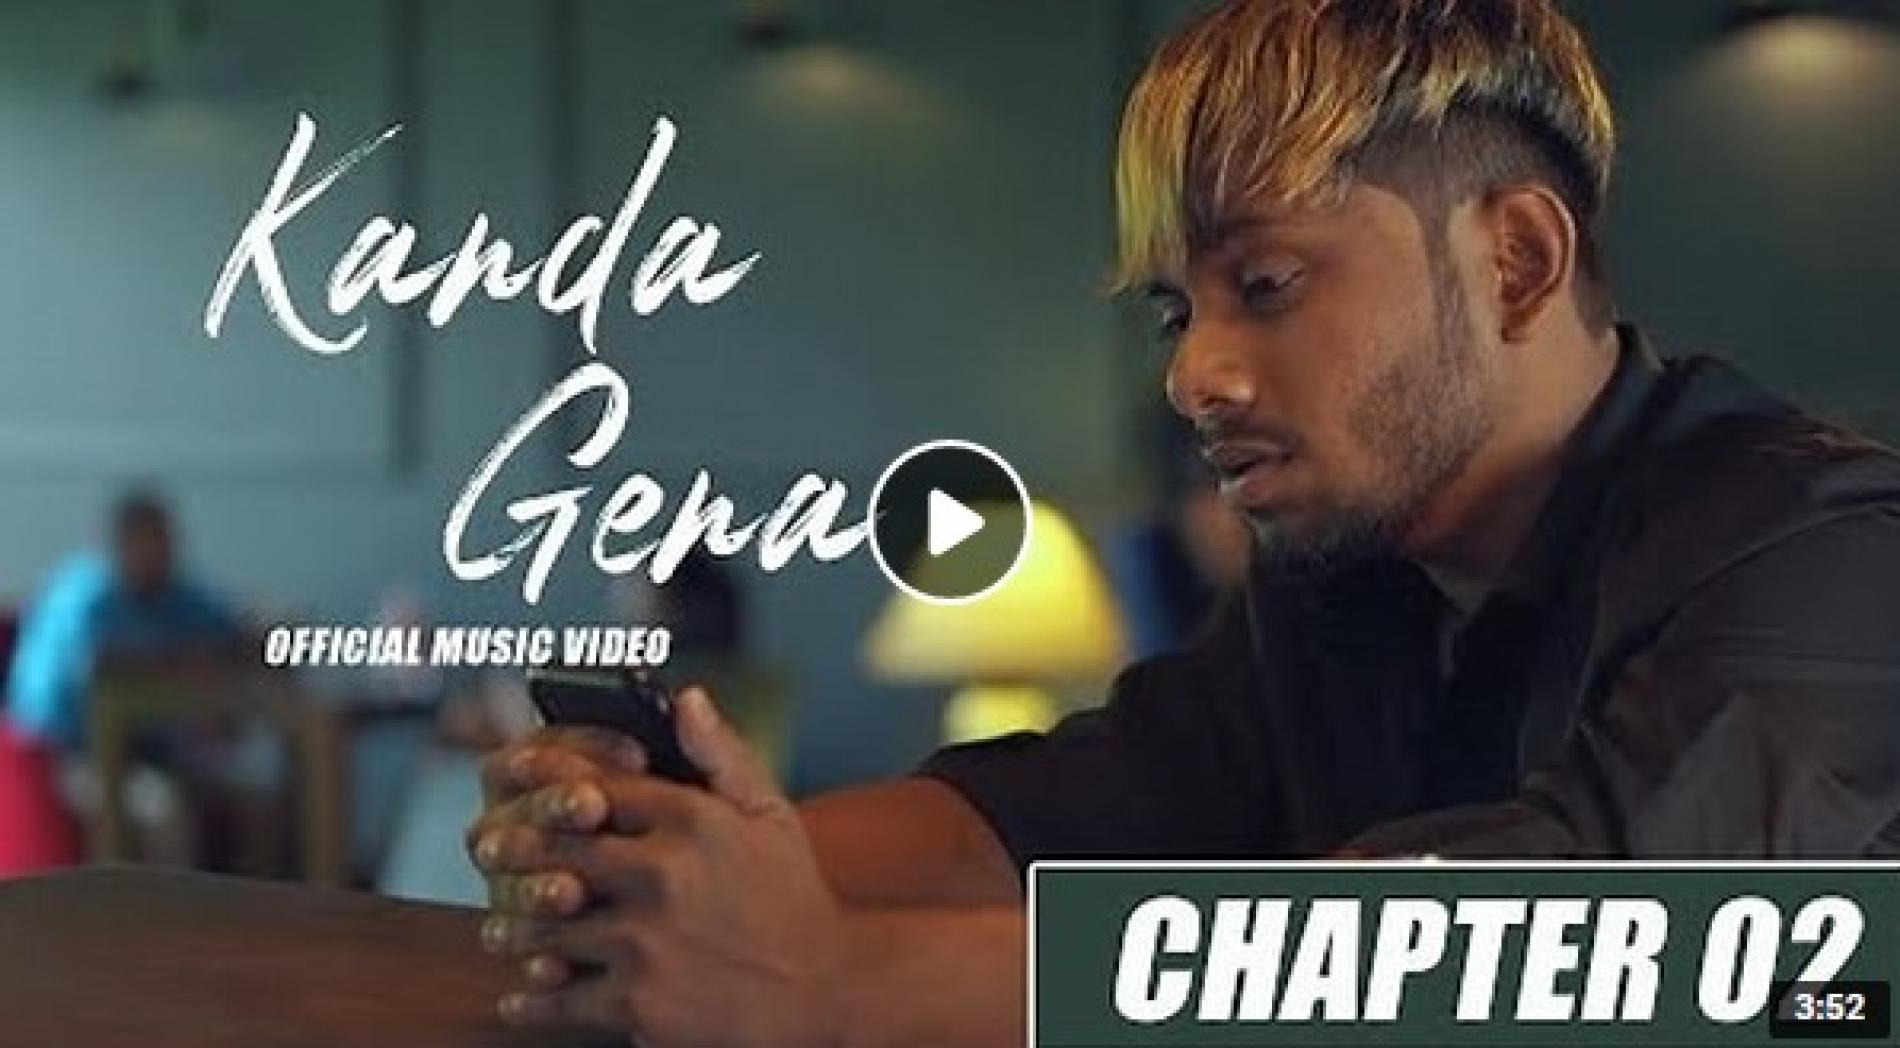 New Music : Chanuka Mora – Kanda Gena (කැන්දා ගෙනා) ft. Shavindya (Official Music Video) CHAPTER 02